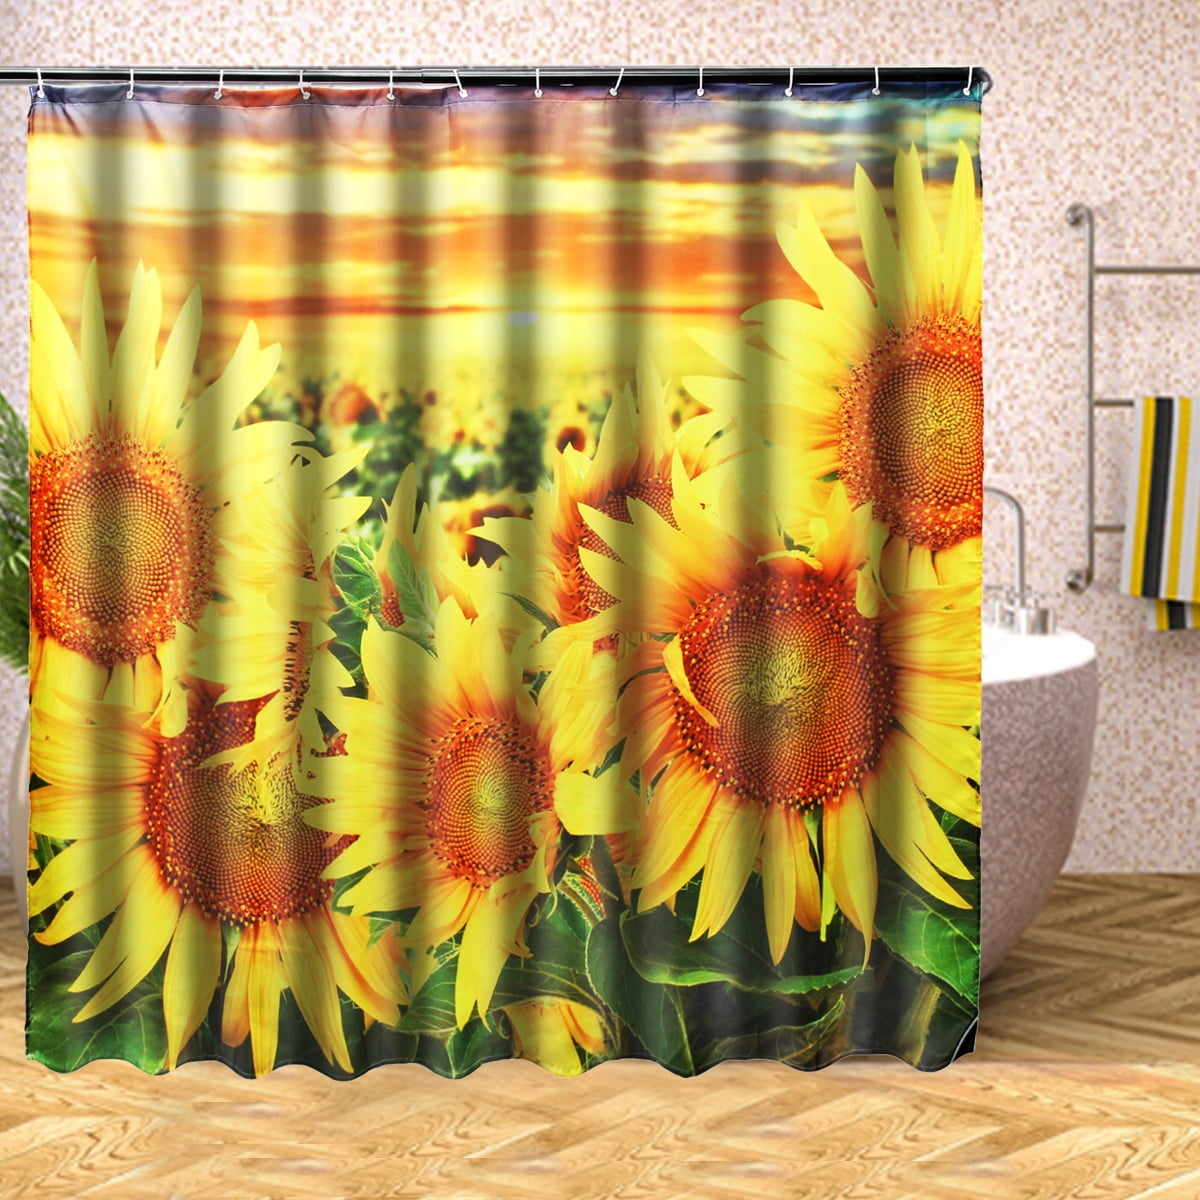 Shower Curtain Bathroom Mat Sunflower Pedestal Rug Toilet Cover Waterproof 71" 